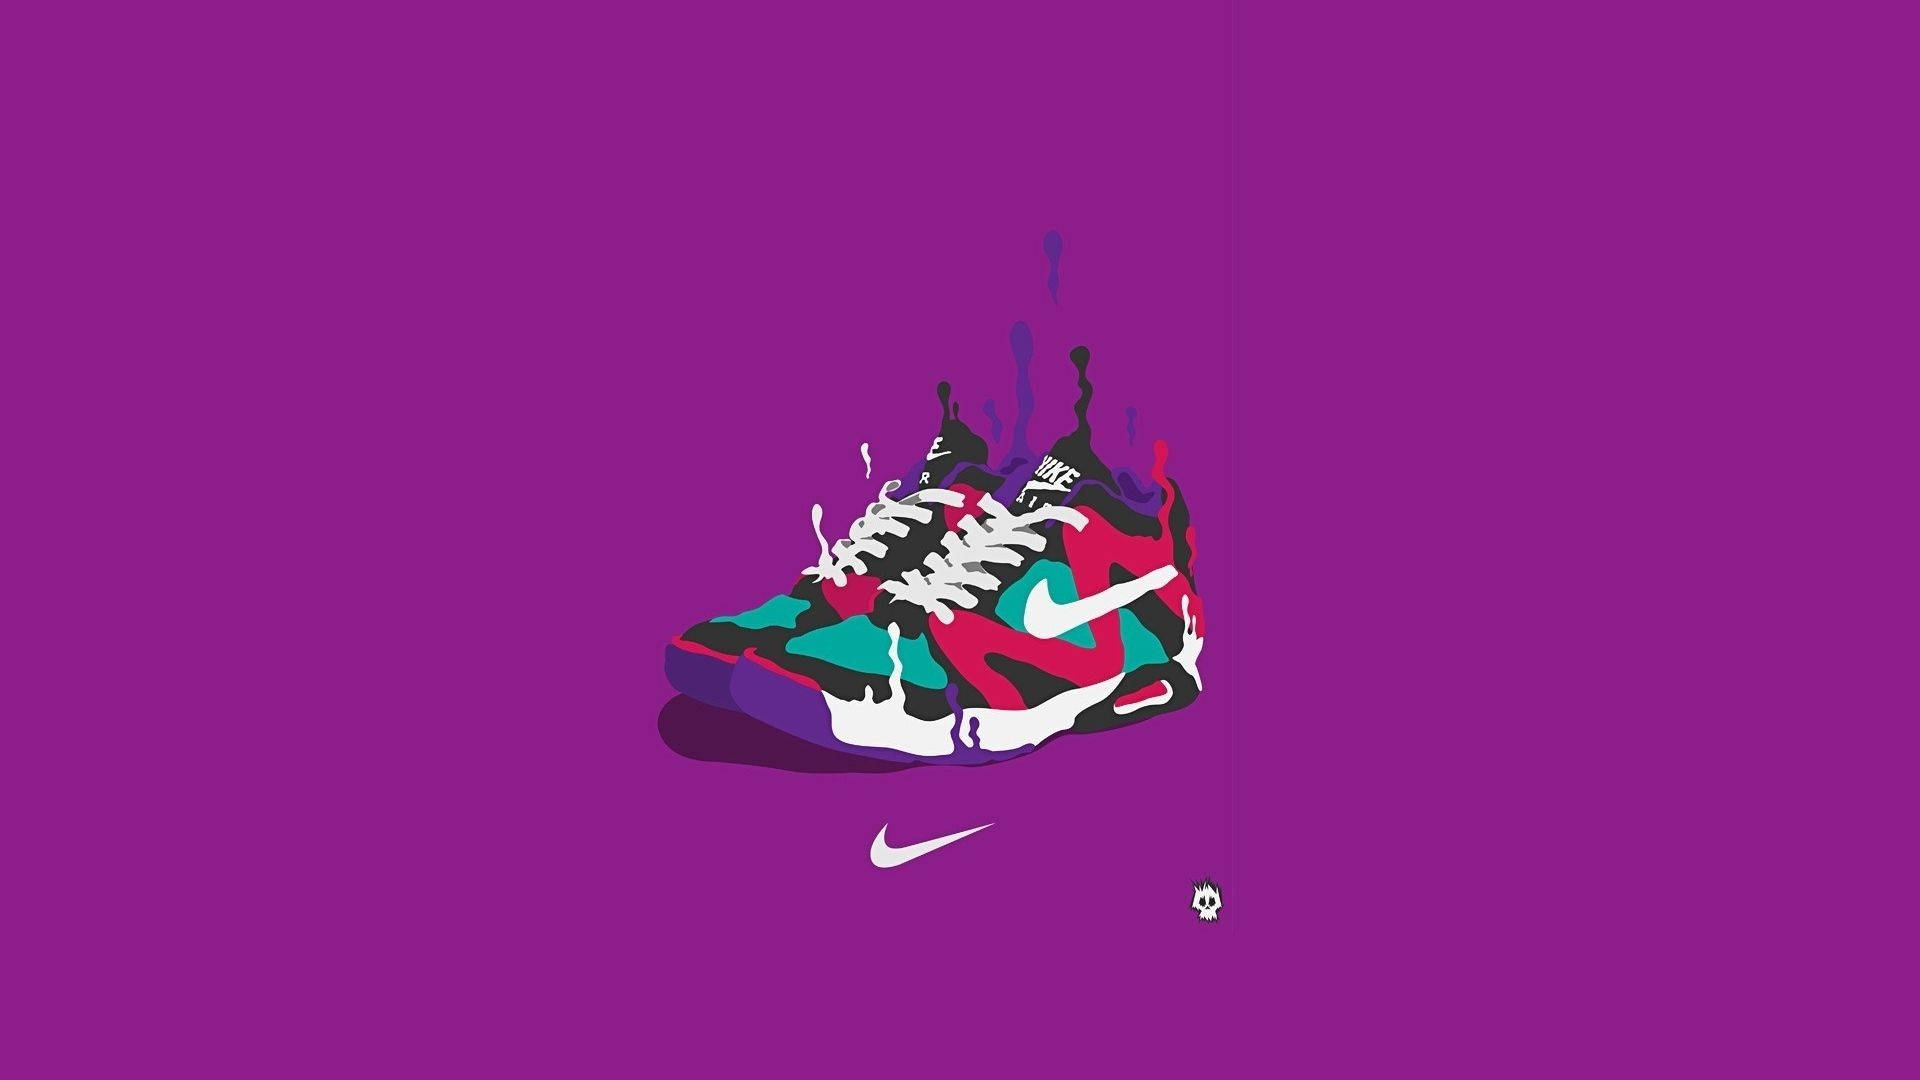 Cool Nike Shoes Digital Art Background